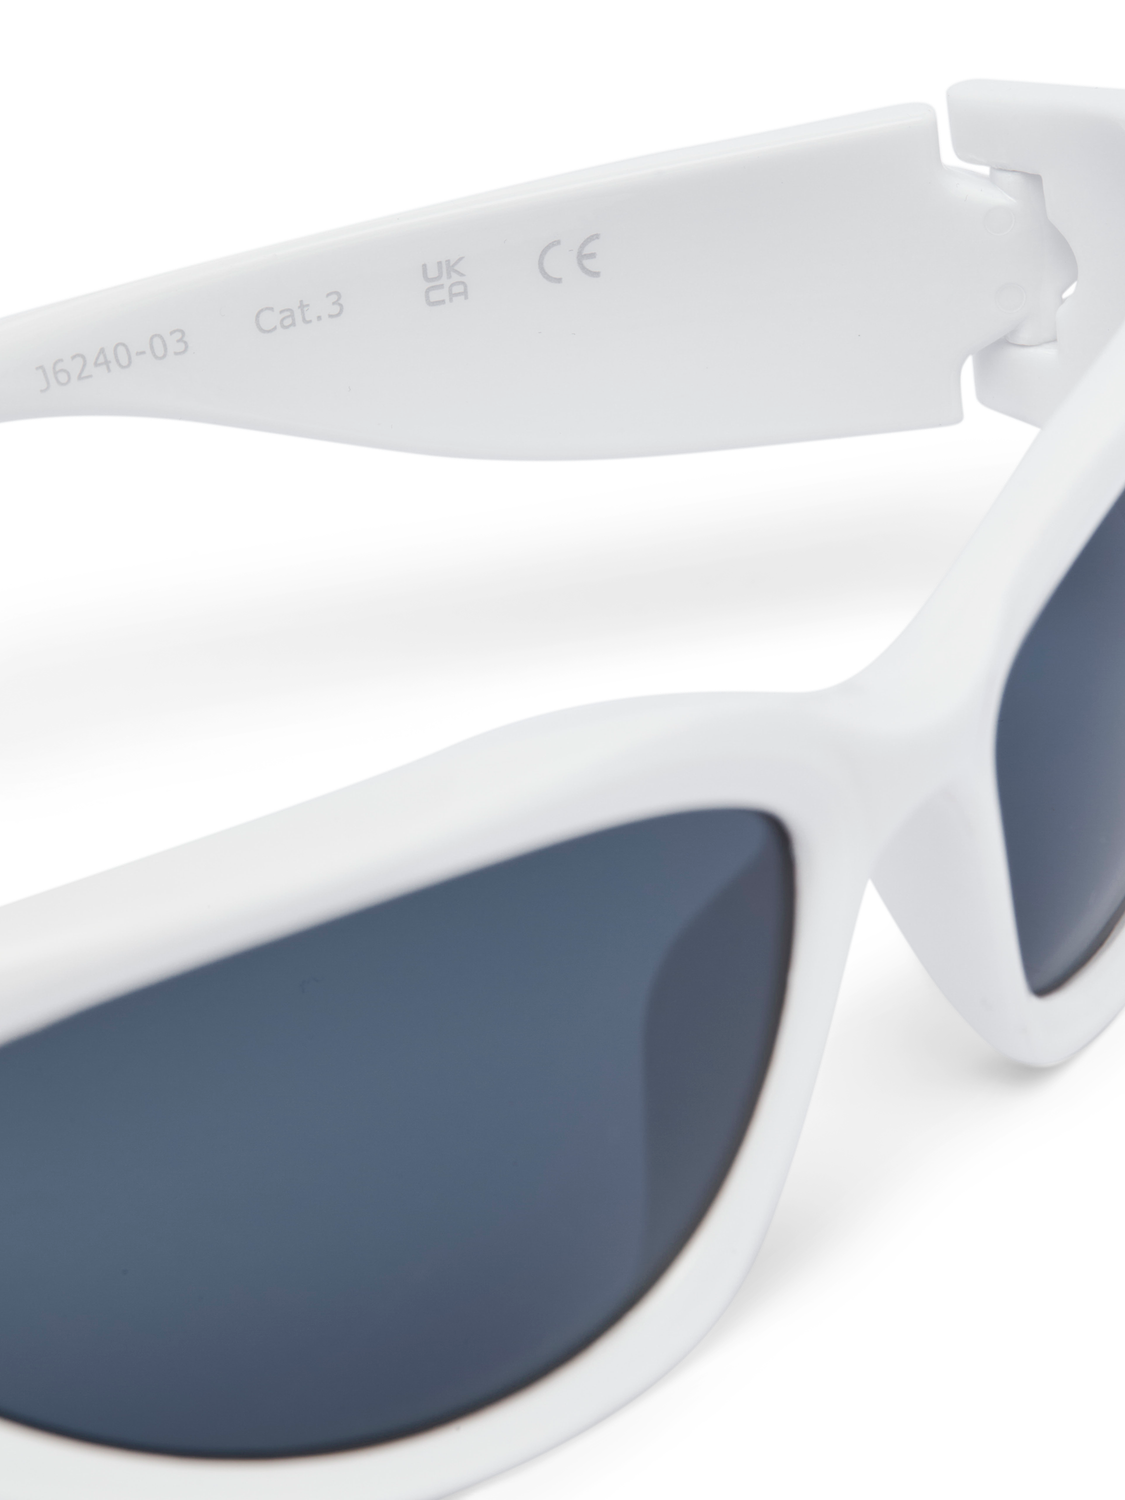 Jack & Jones Gafas de sol rectangulares Plástico -White - 12251497